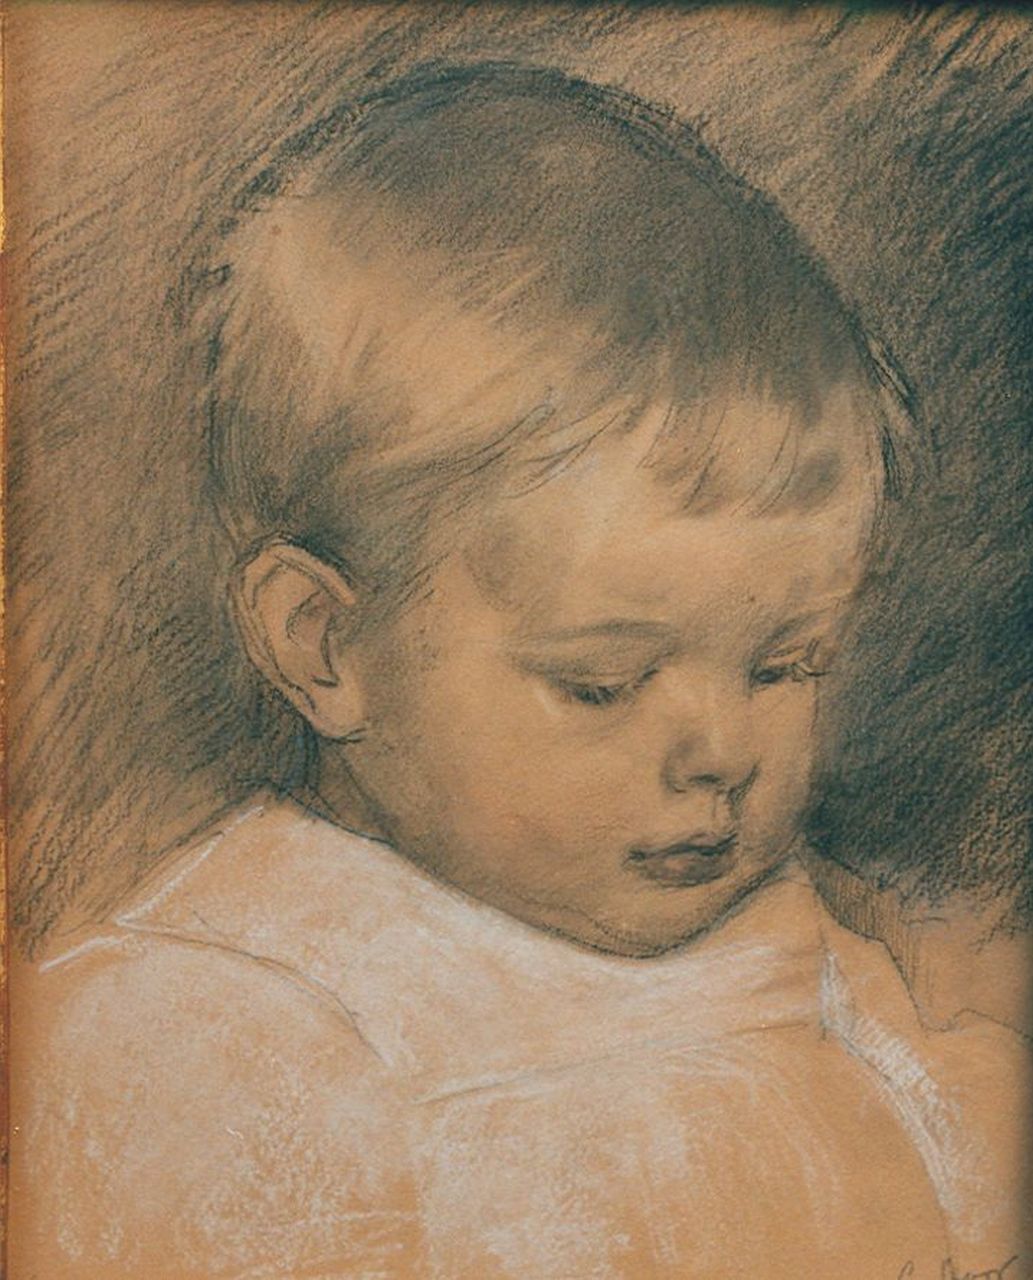 Spoor C.R.H.  | 'Cornelis' Rudolf Hendrik  Spoor, A portrait of a baby, Zeichnung auf Papier 27,5 x 21,2 cm, signed l.r.